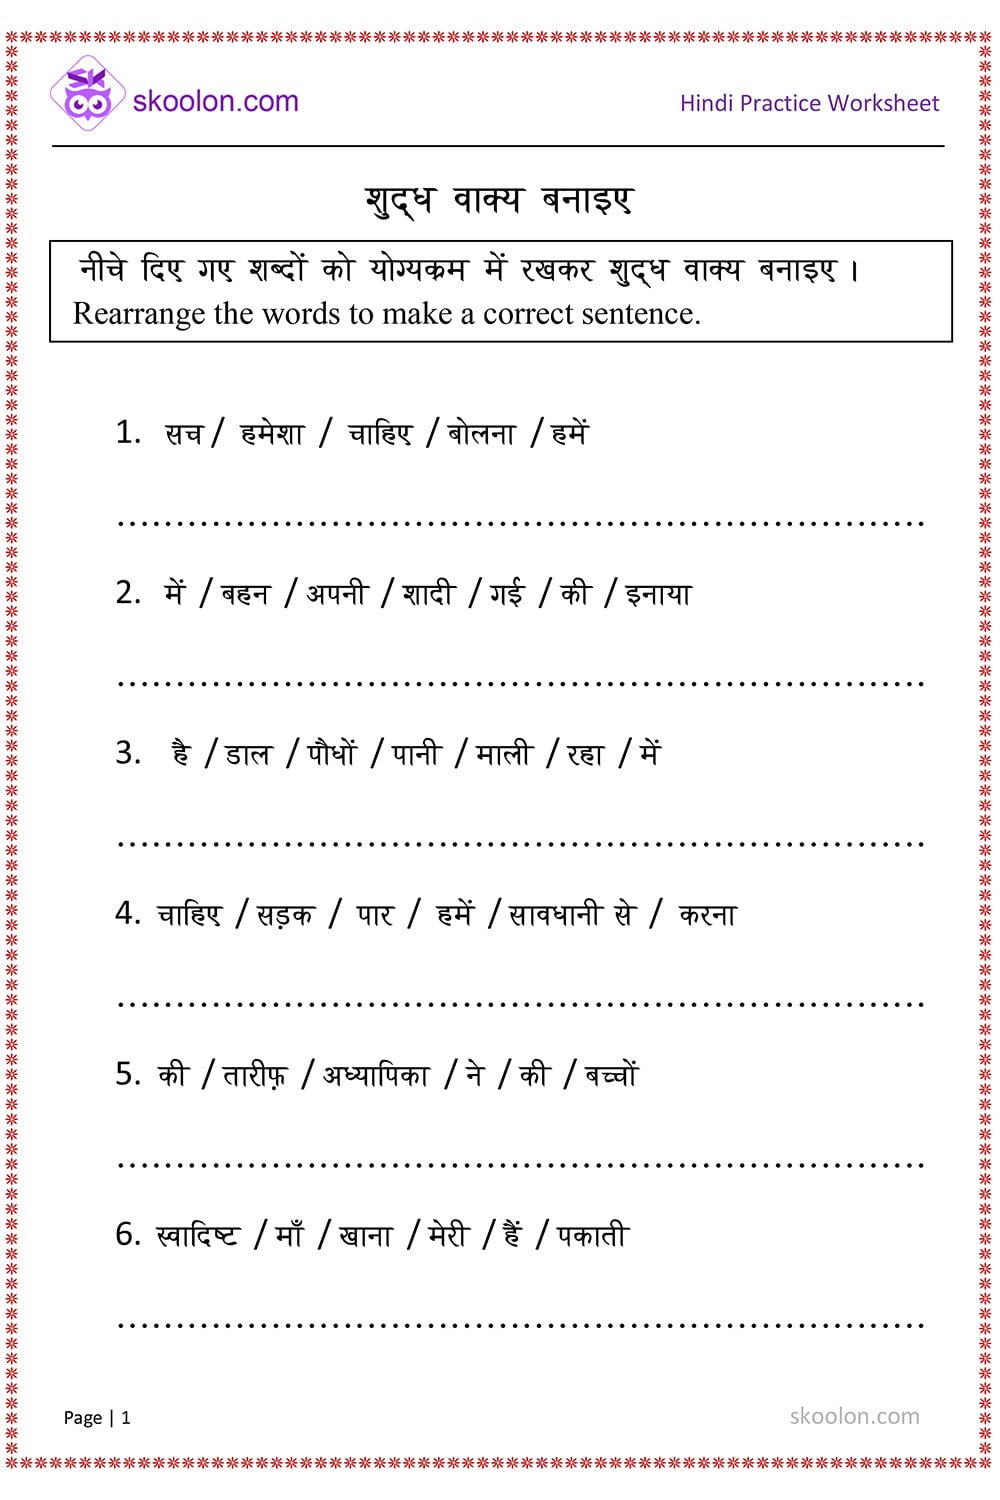 make-sentences-in-hindi-archives-skoolon